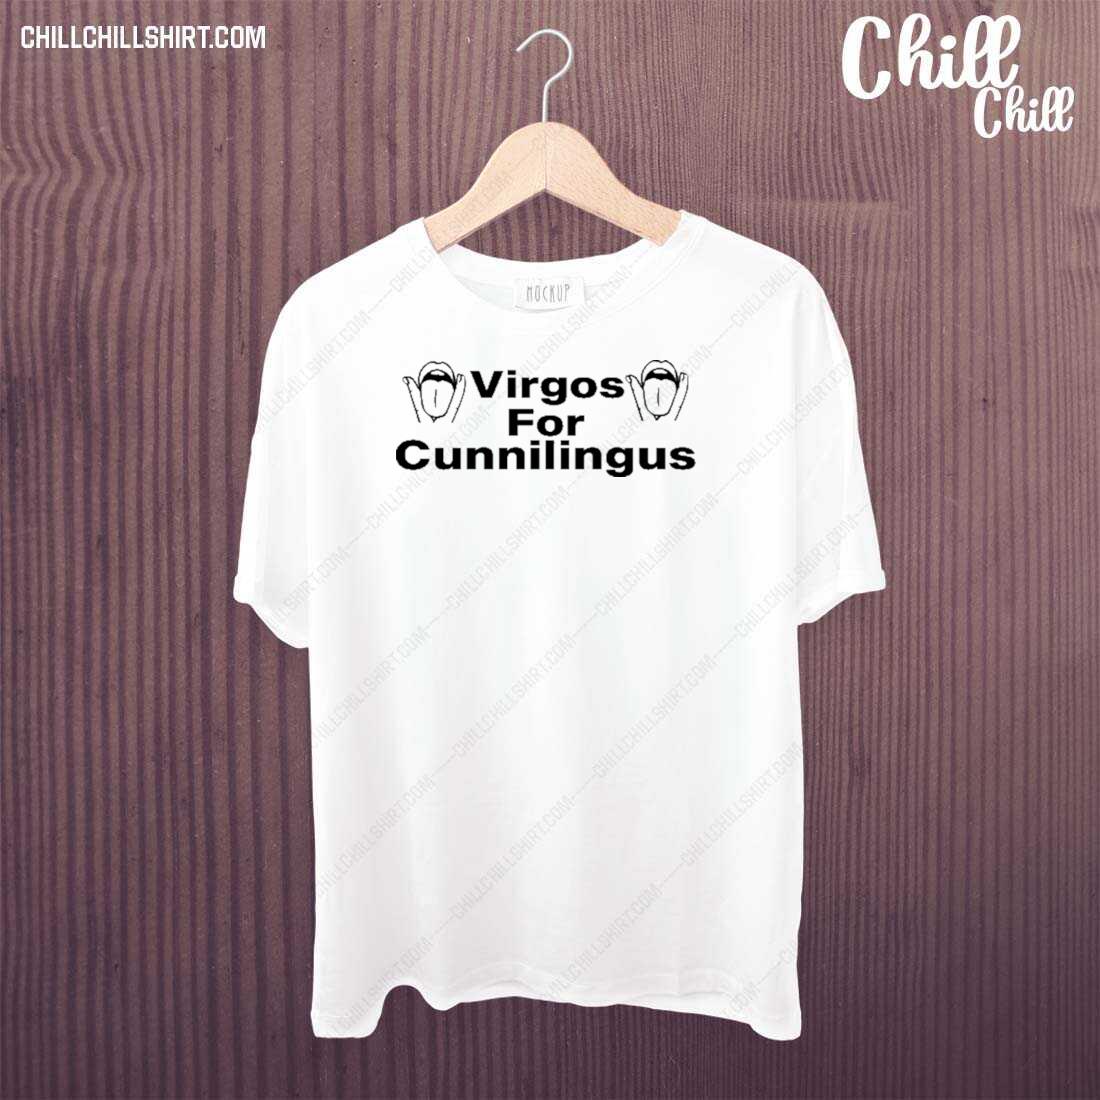 Official virgos For Cunnilingus Tee T-shirt